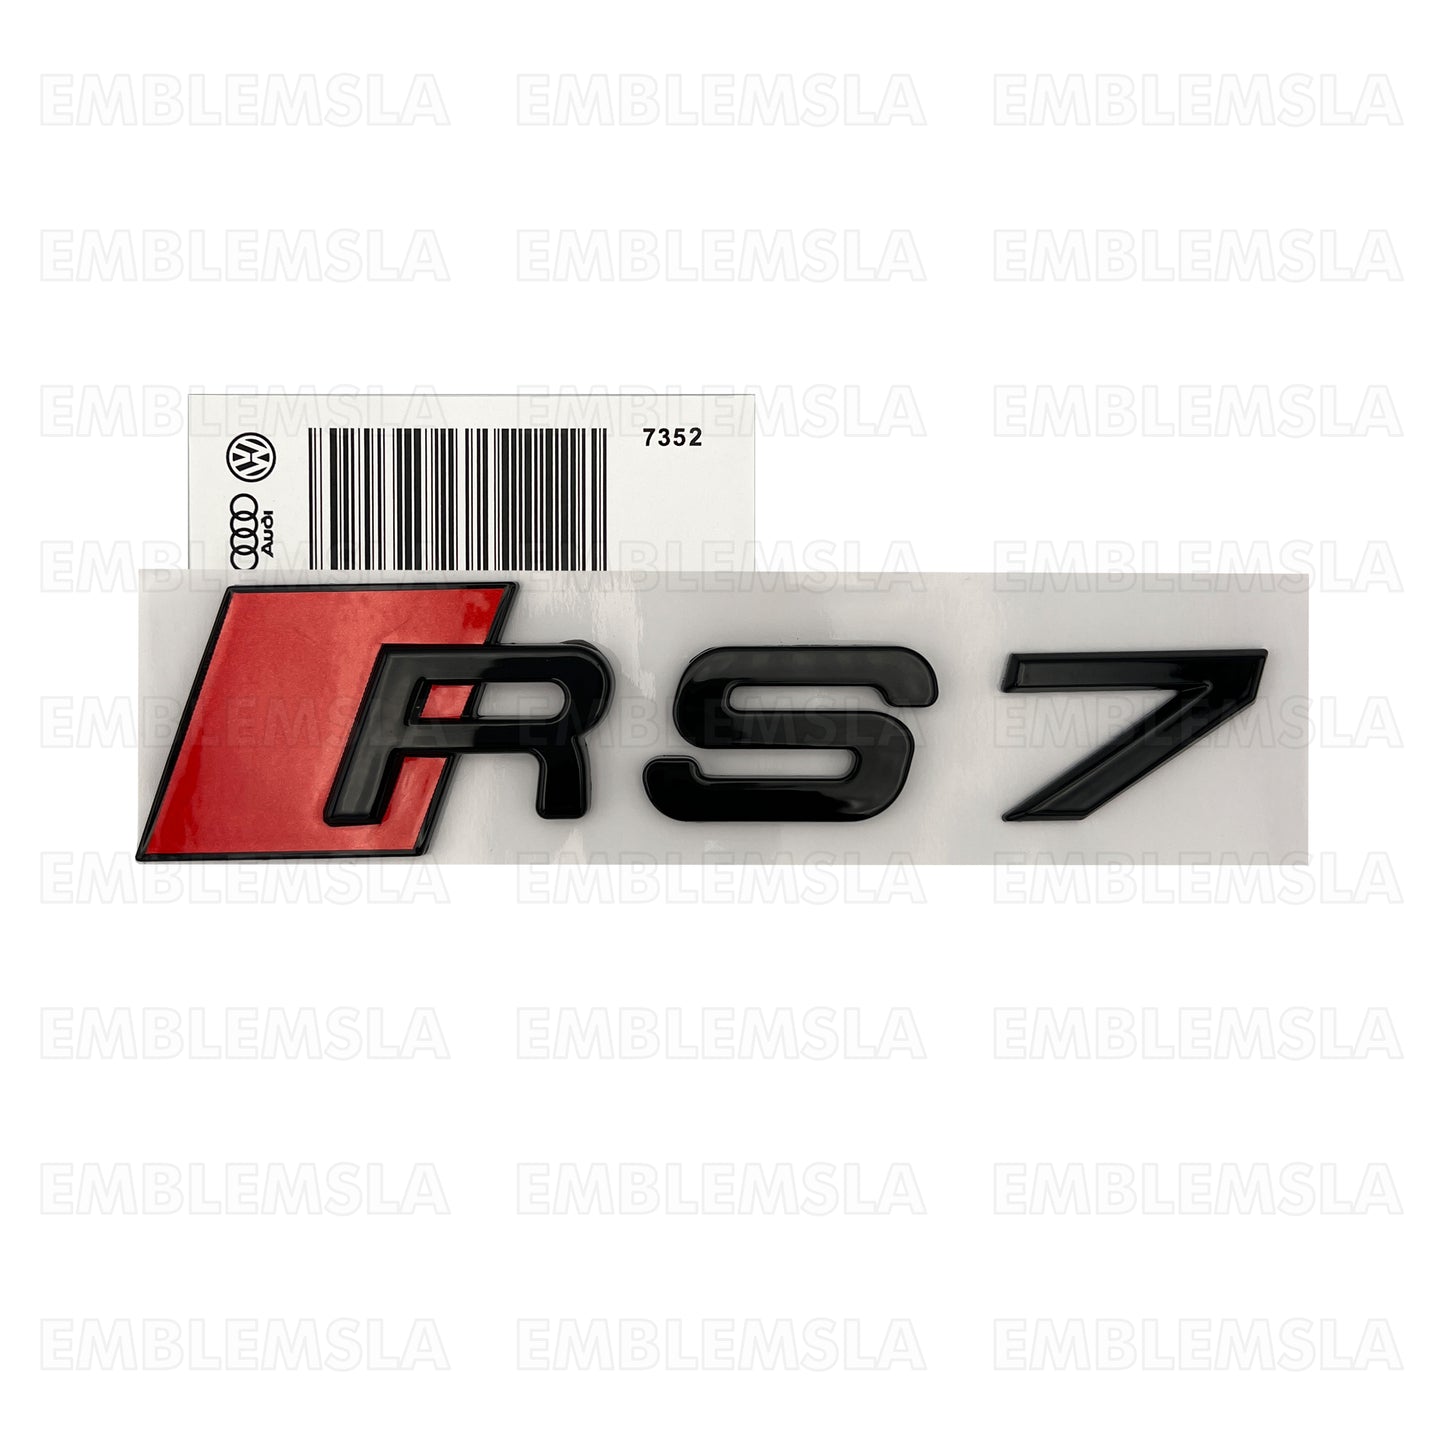 Audi RS7 Gloss Black Emblem 3D Badge Rear Trunk Tailgate fit Audi RS7 A7 S7 Logo